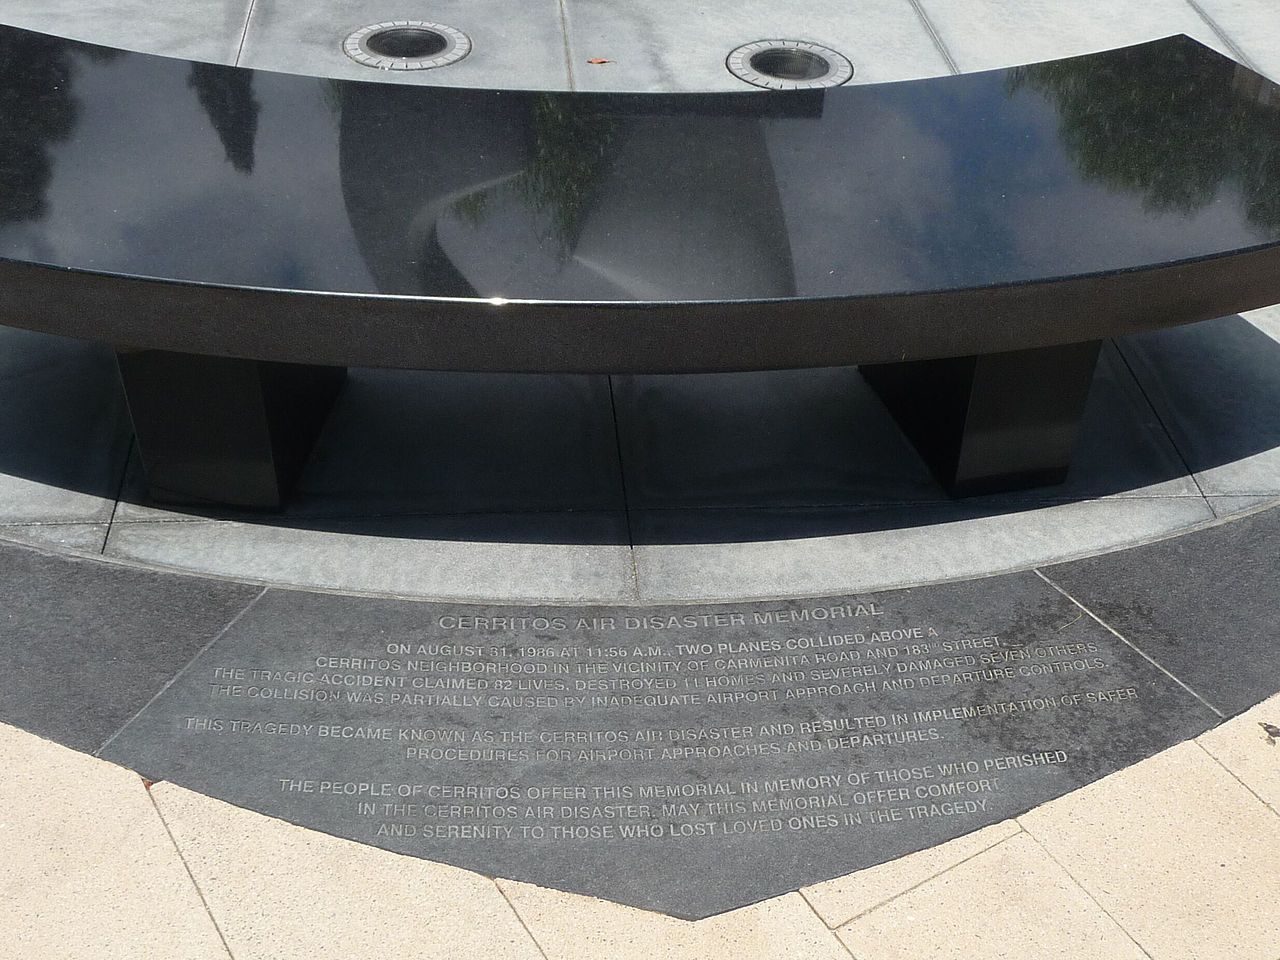 Cerritos Air Disaster Memorial Dedication Plaque